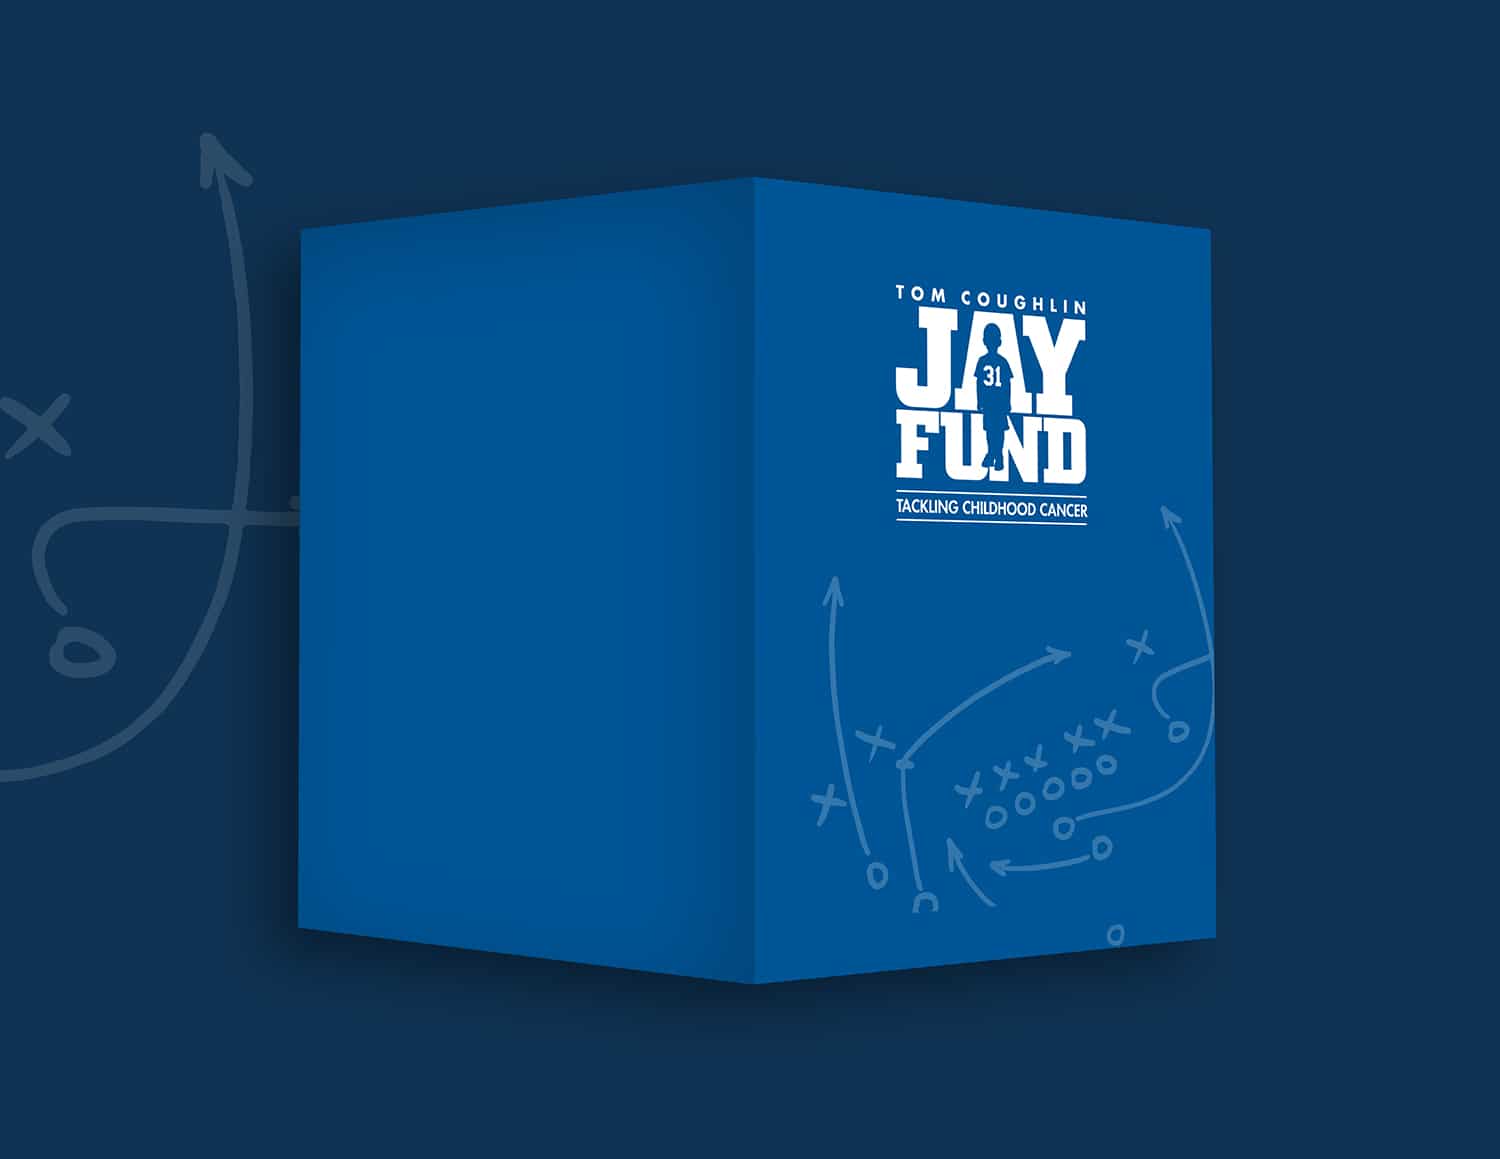 Jay Fund Foundation Folder Design by Digital Marketing Agency Beson4 in Jacksonville, FL